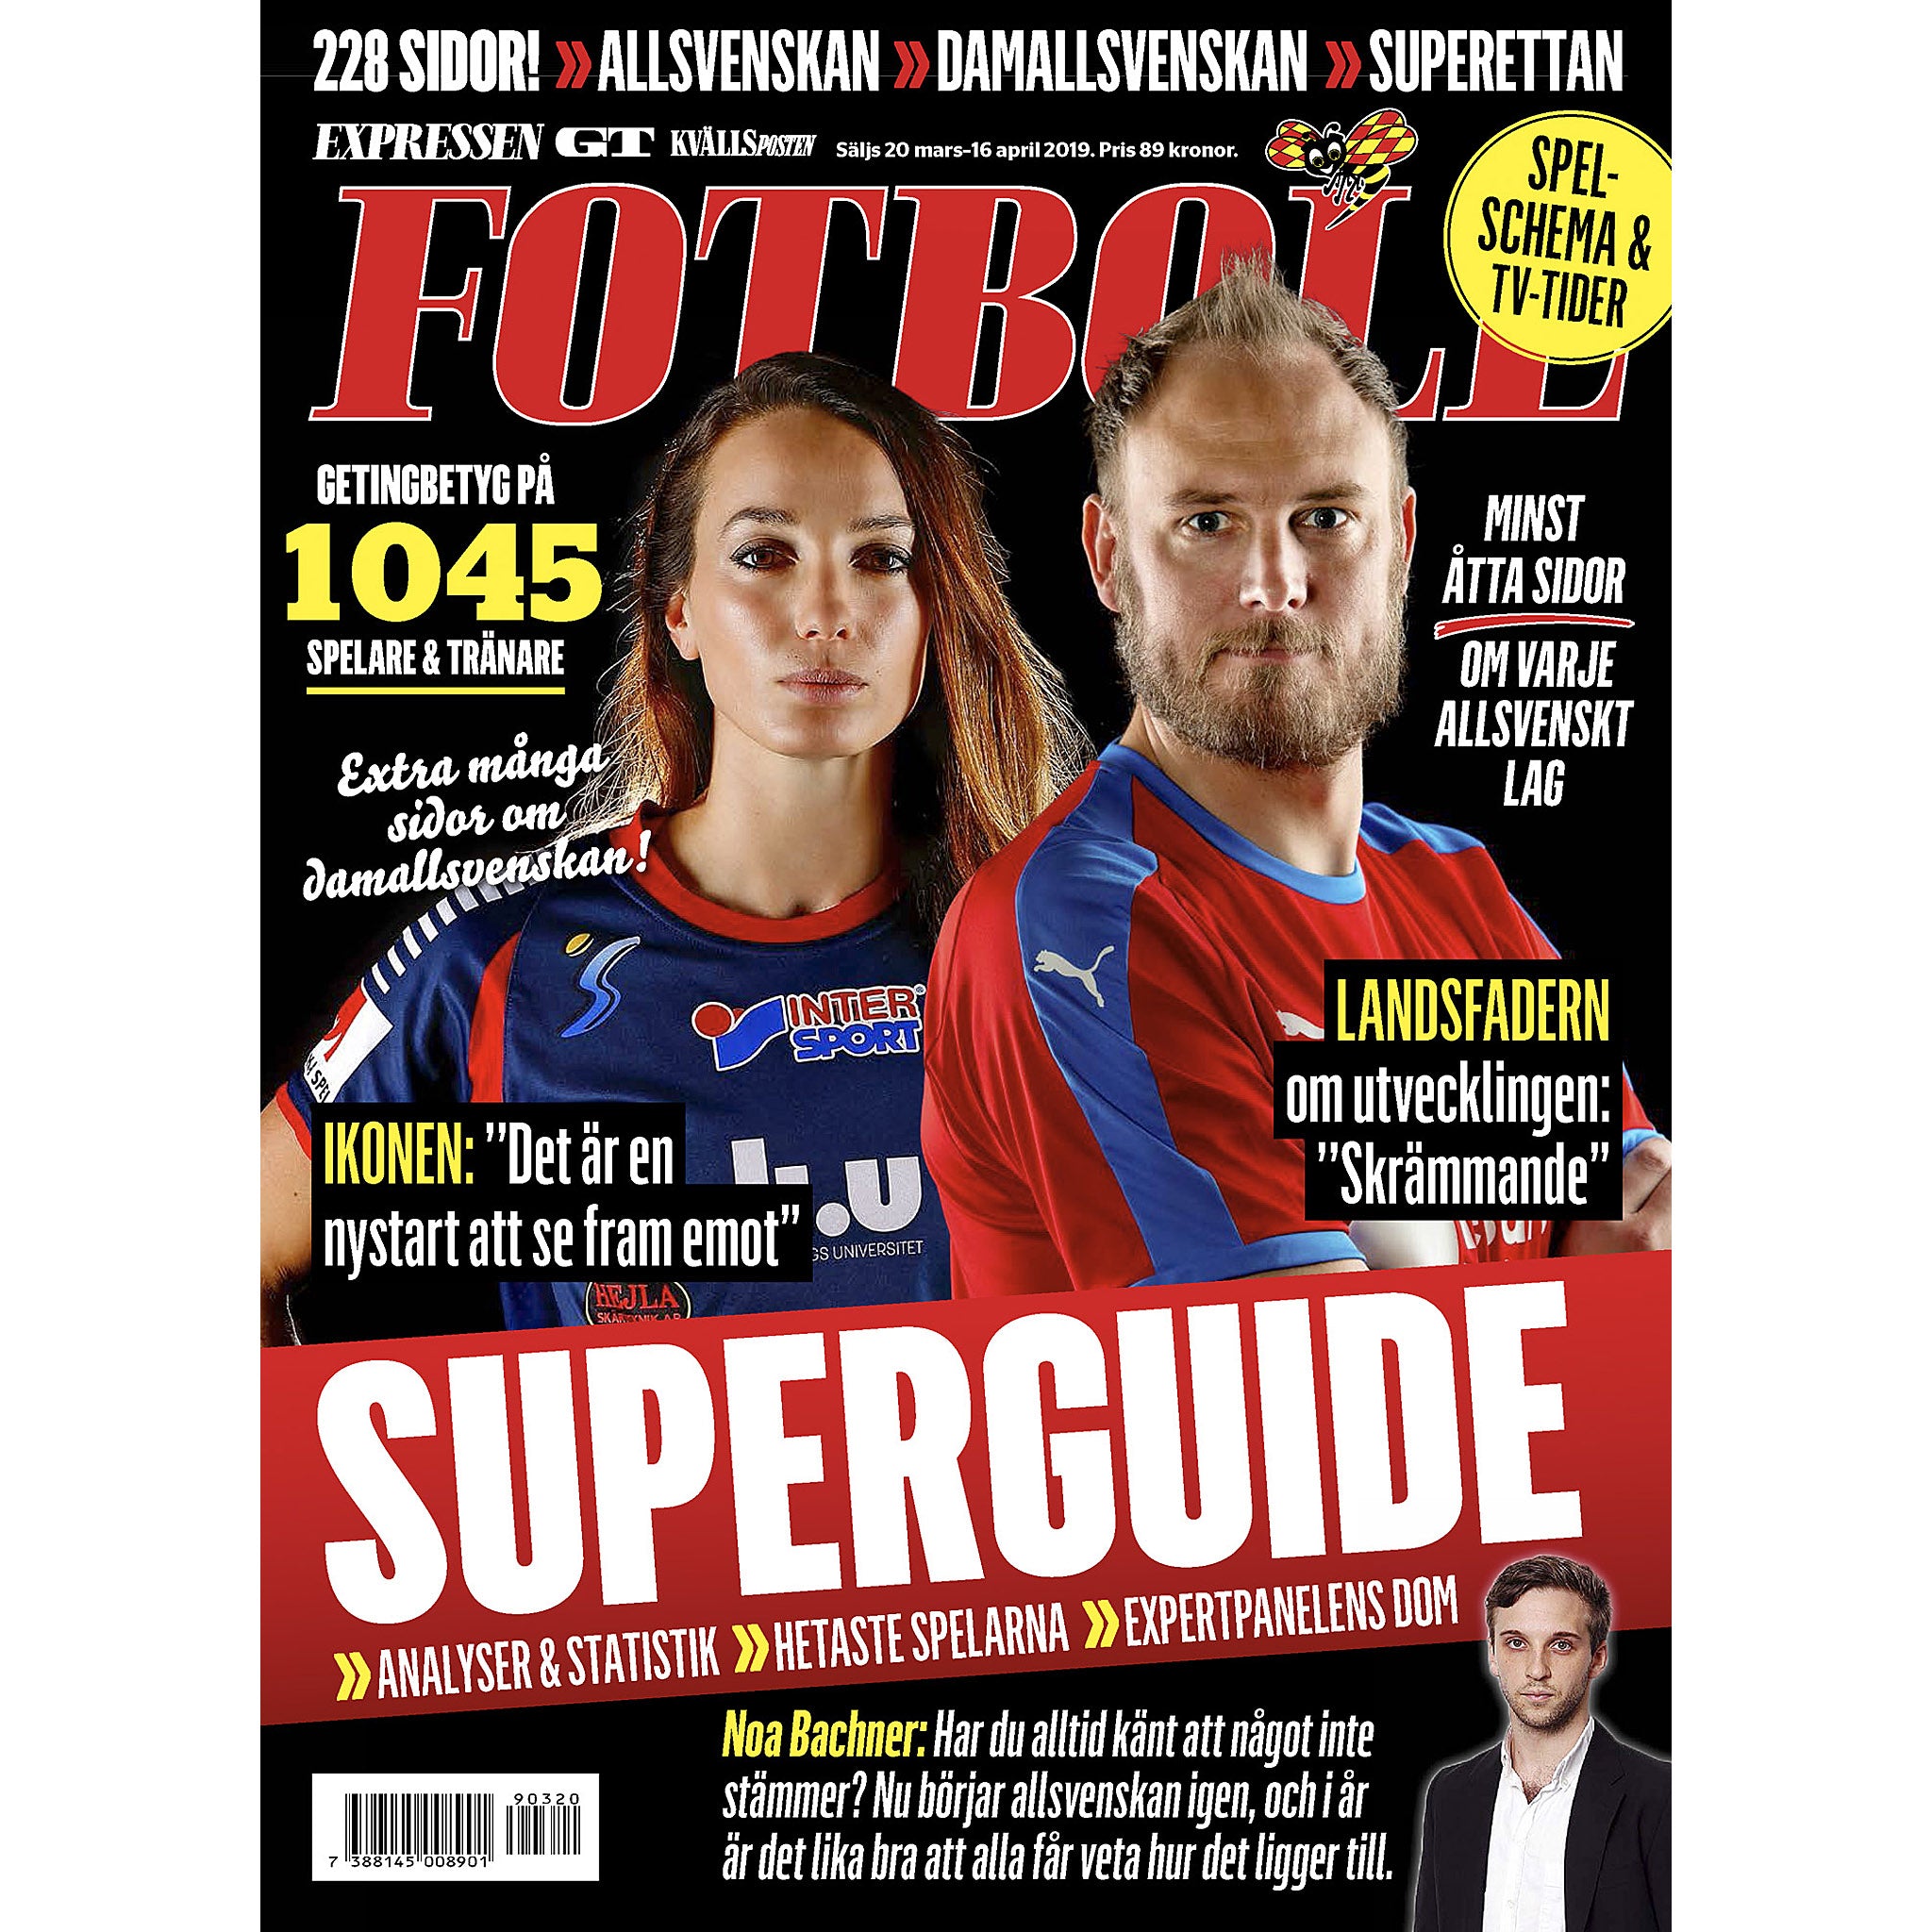 Expressen Fotboll Allsvenskan Superguide 2019 (Sweden Season Preview Magazine)